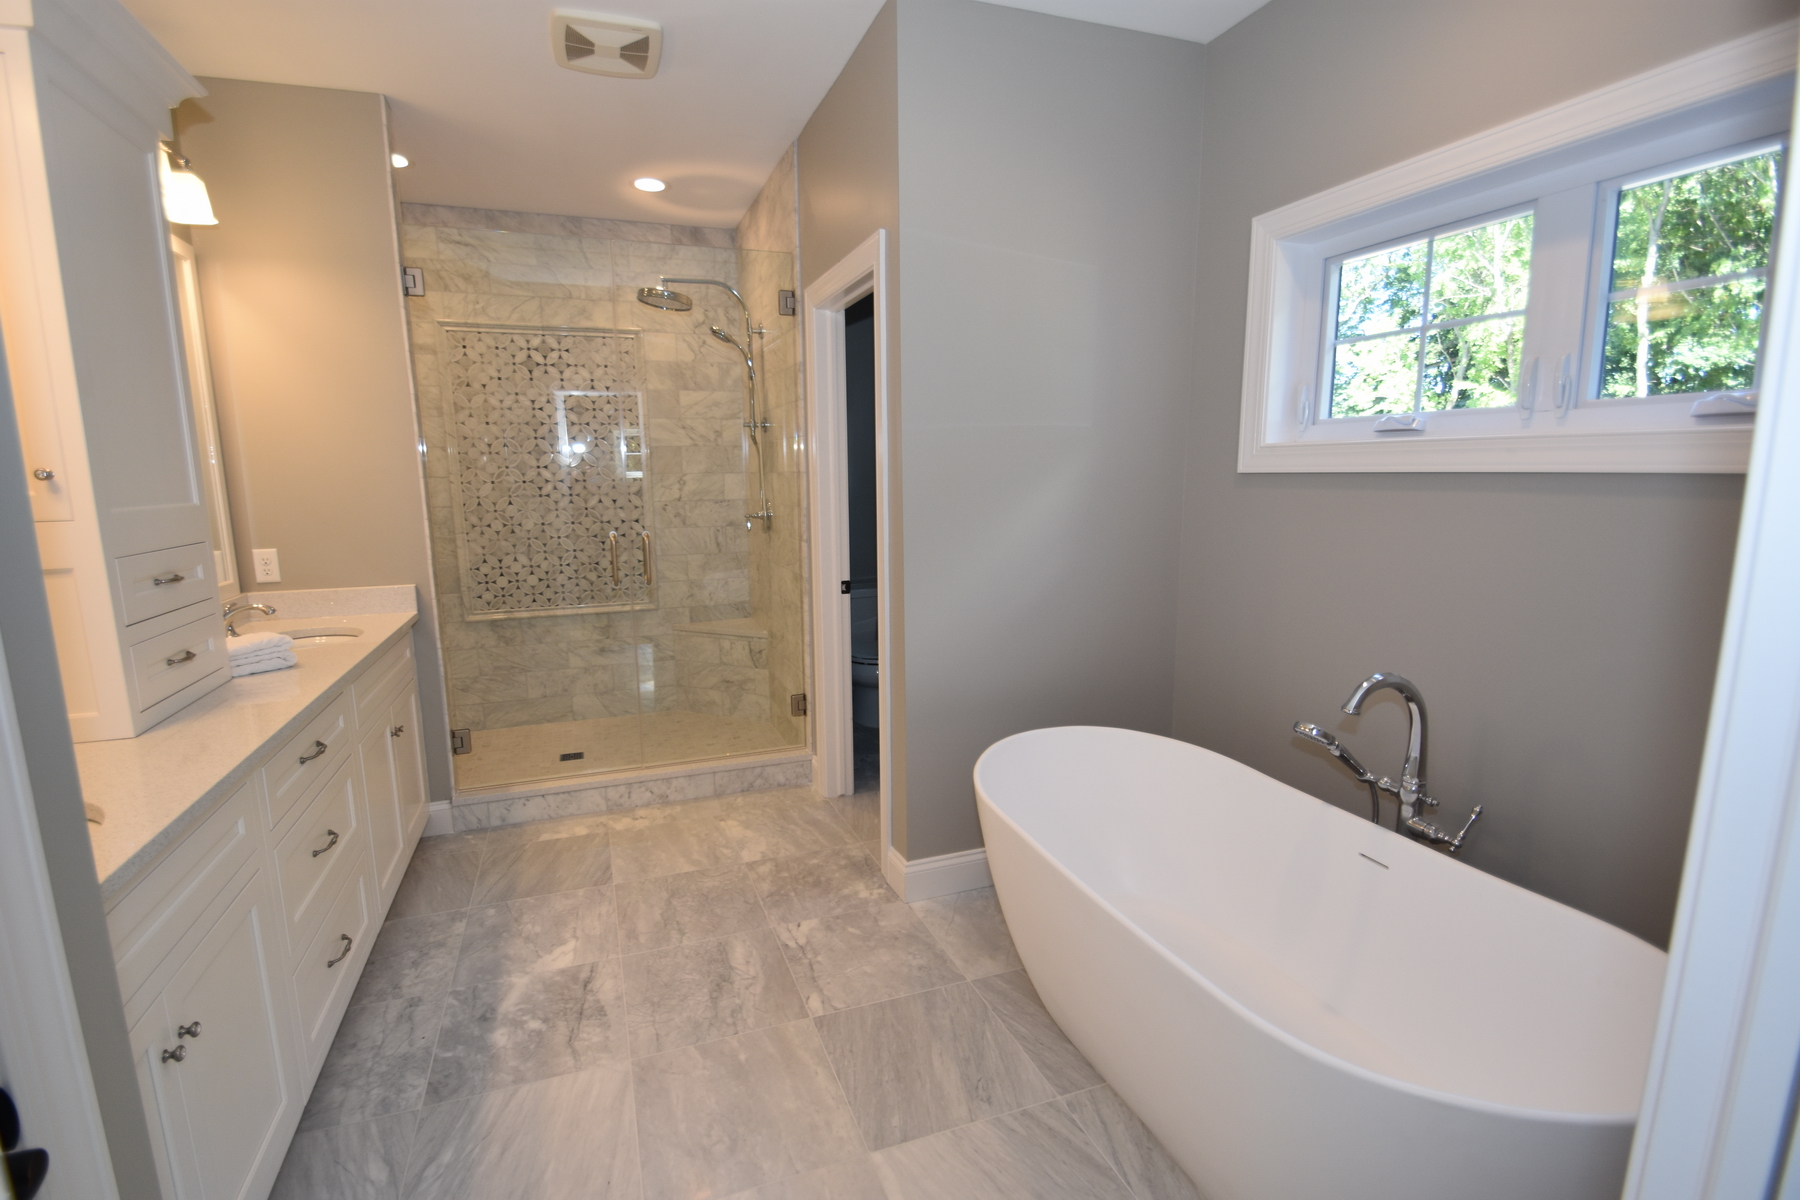 Luxurious Bathroom with Marble Tile